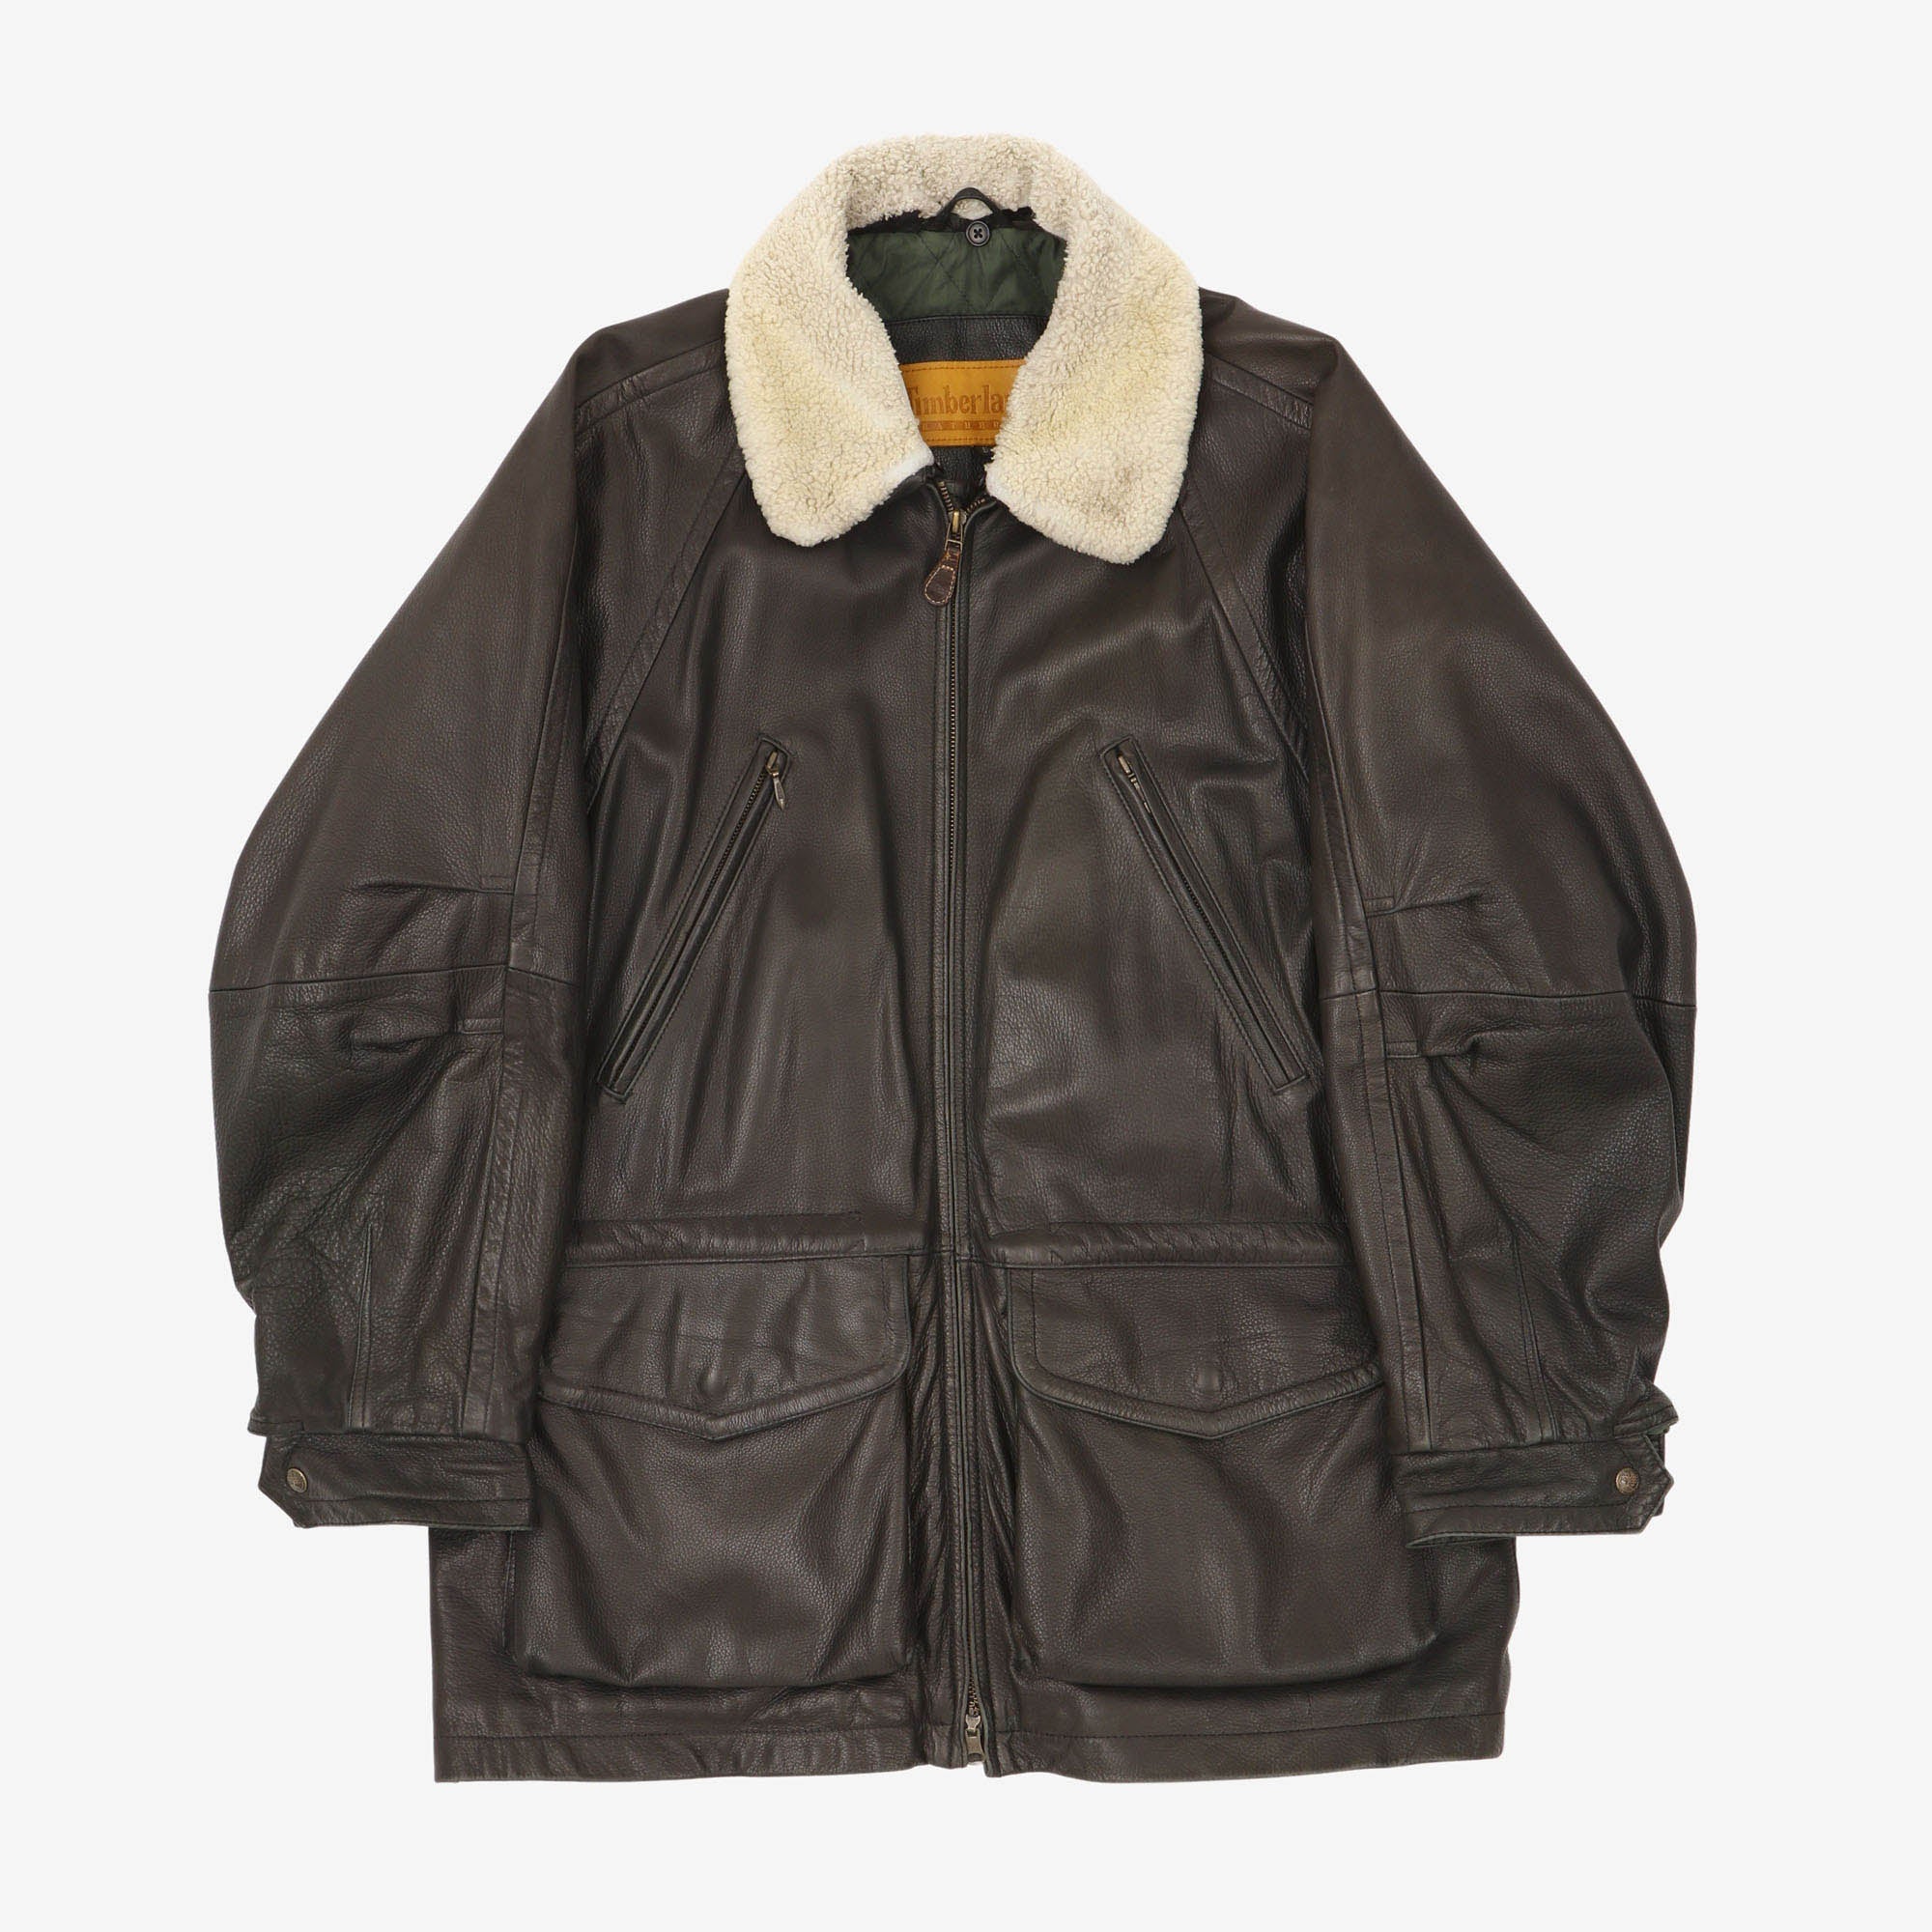 Timberland Leather Jacket Marrkt